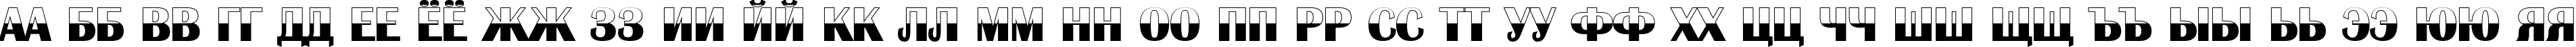 Пример написания русского алфавита шрифтом a_AlbionicB&W